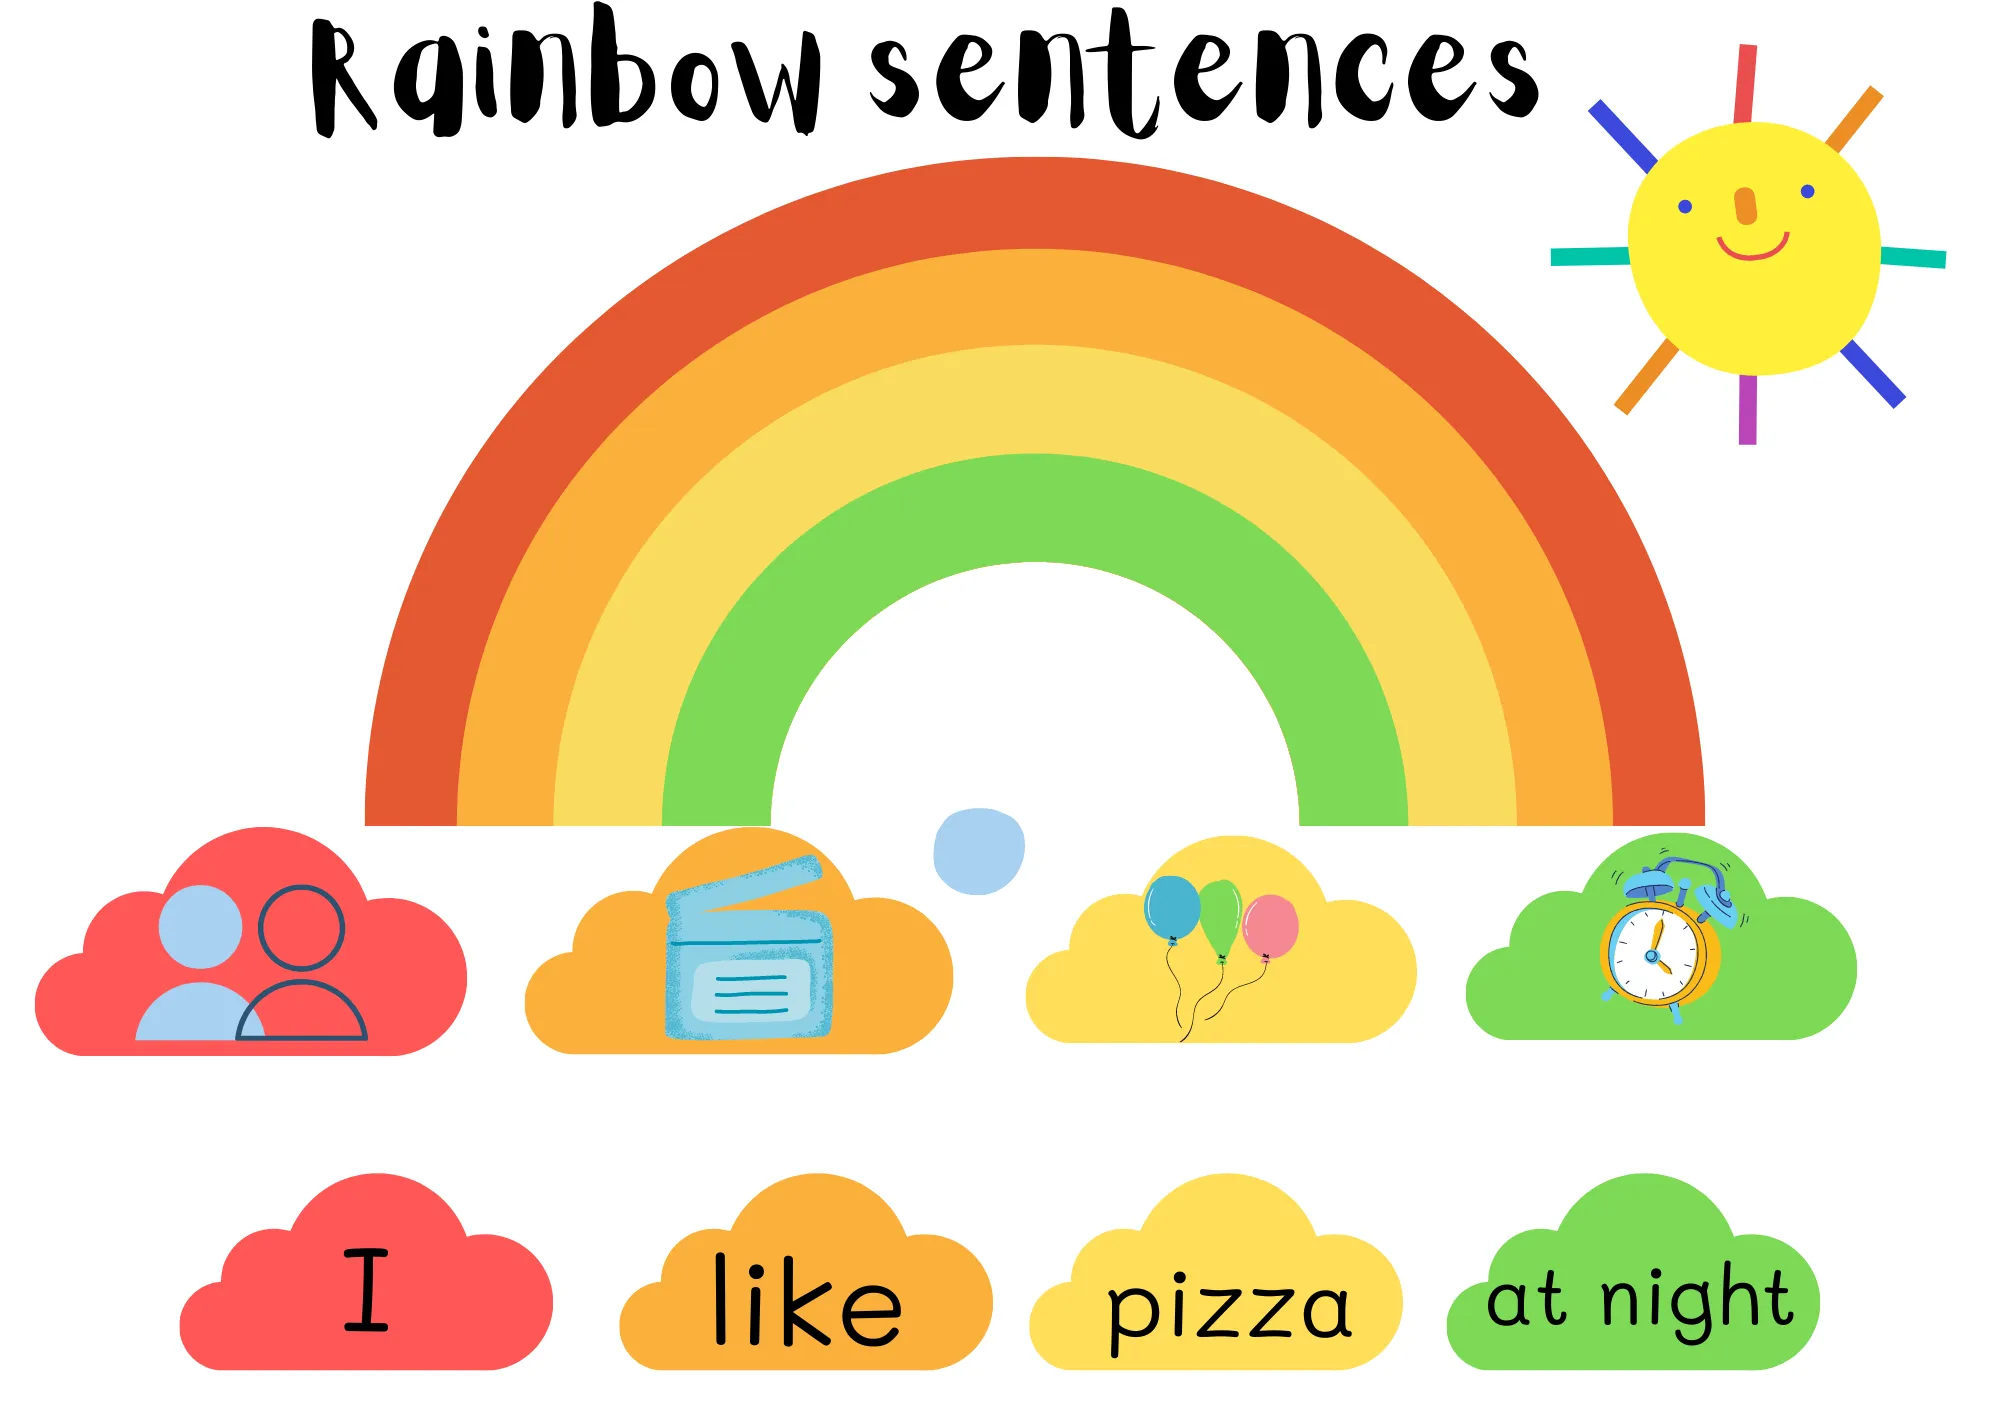 Rainbow sentences part 1